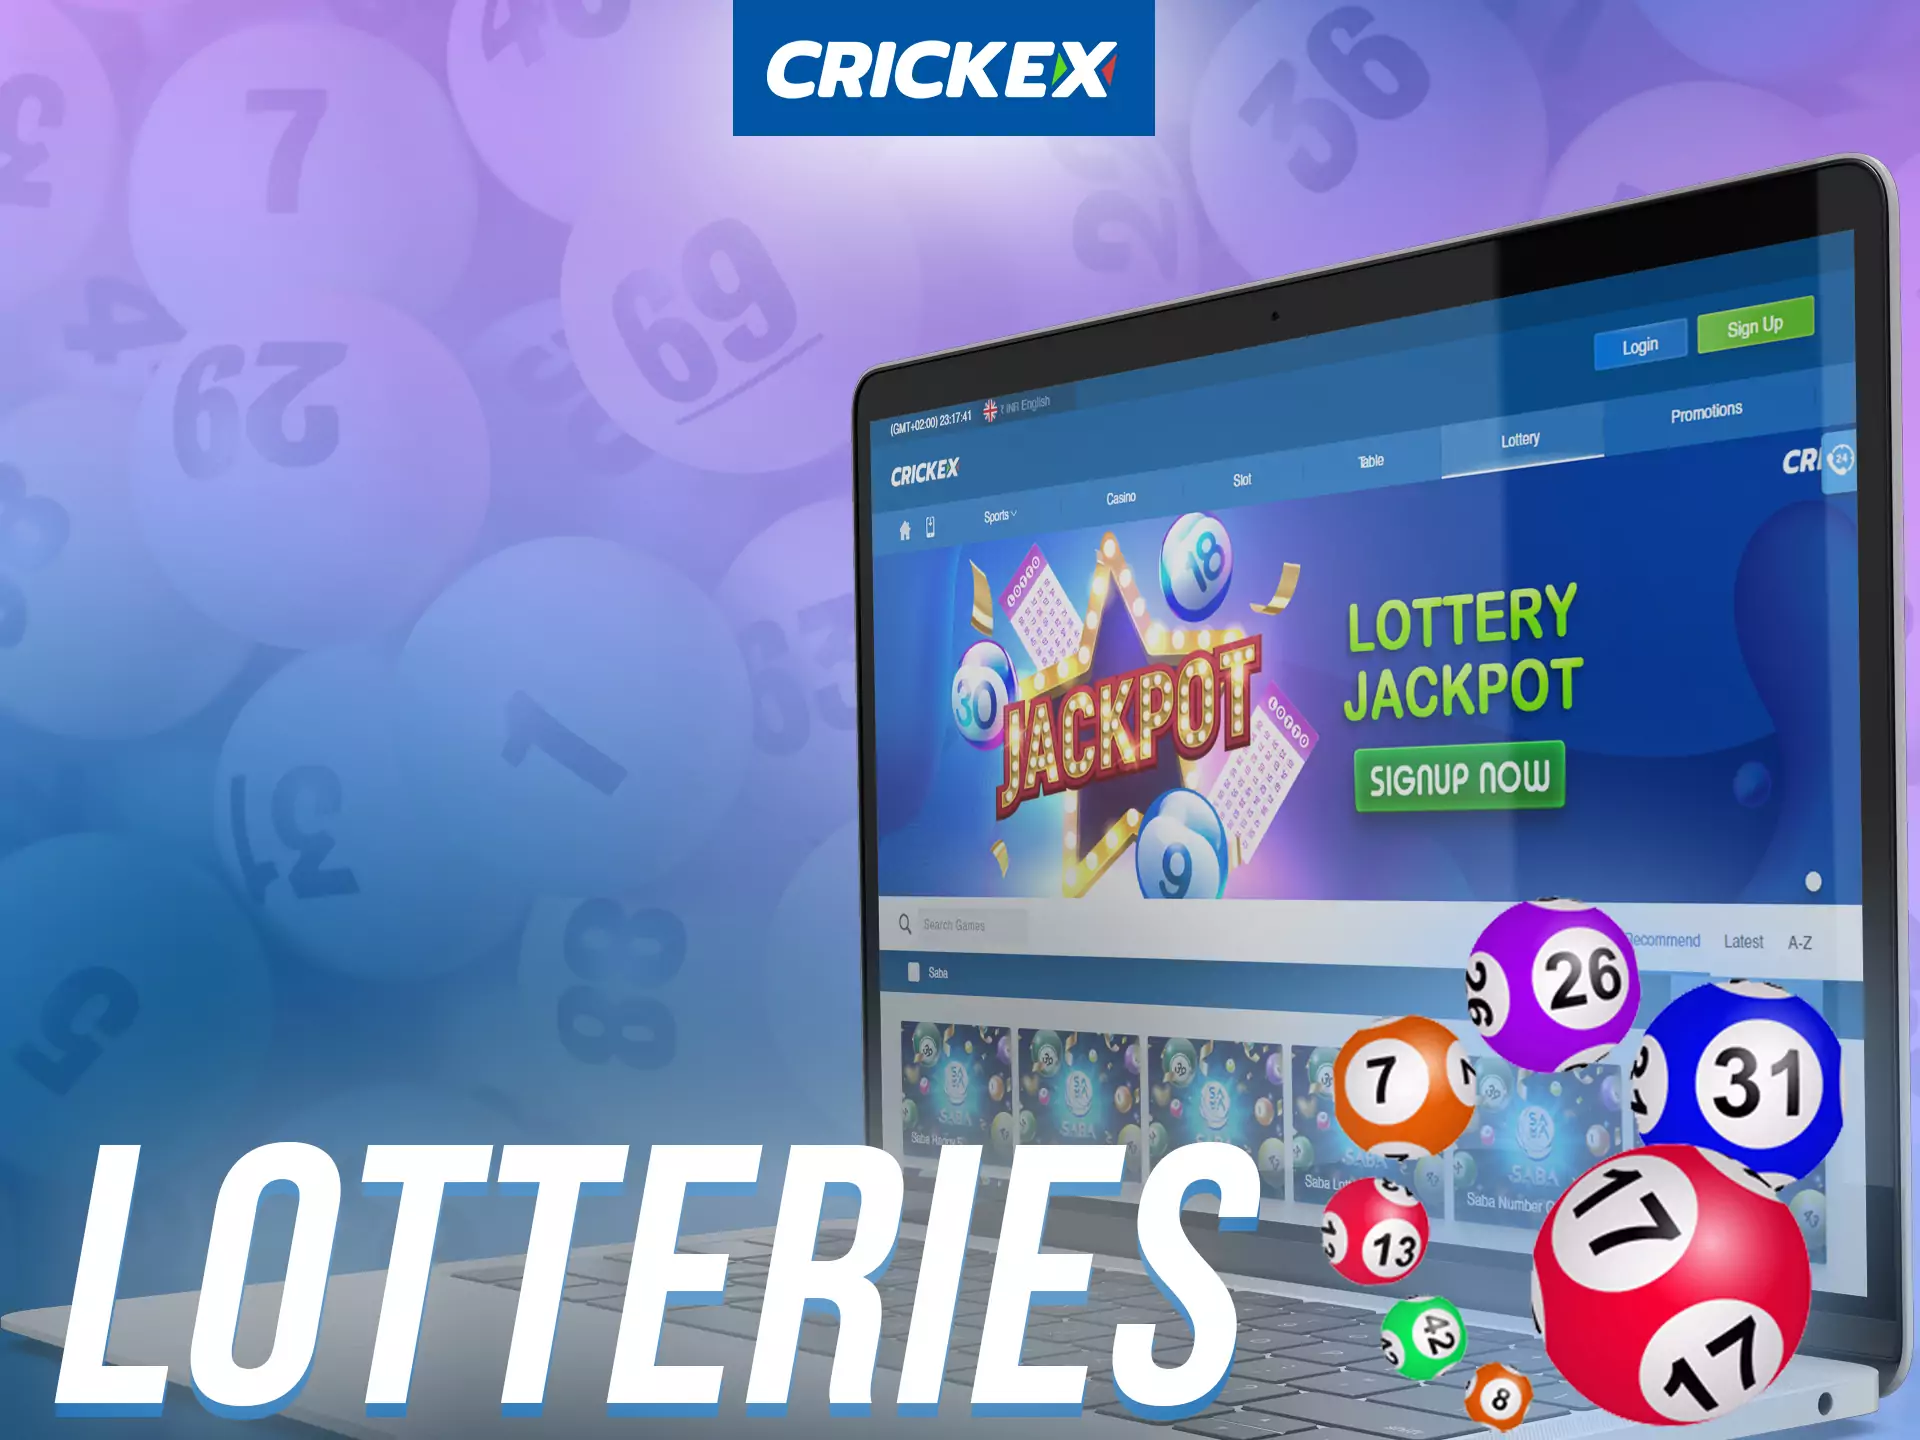 On Crickex, play lotteries.